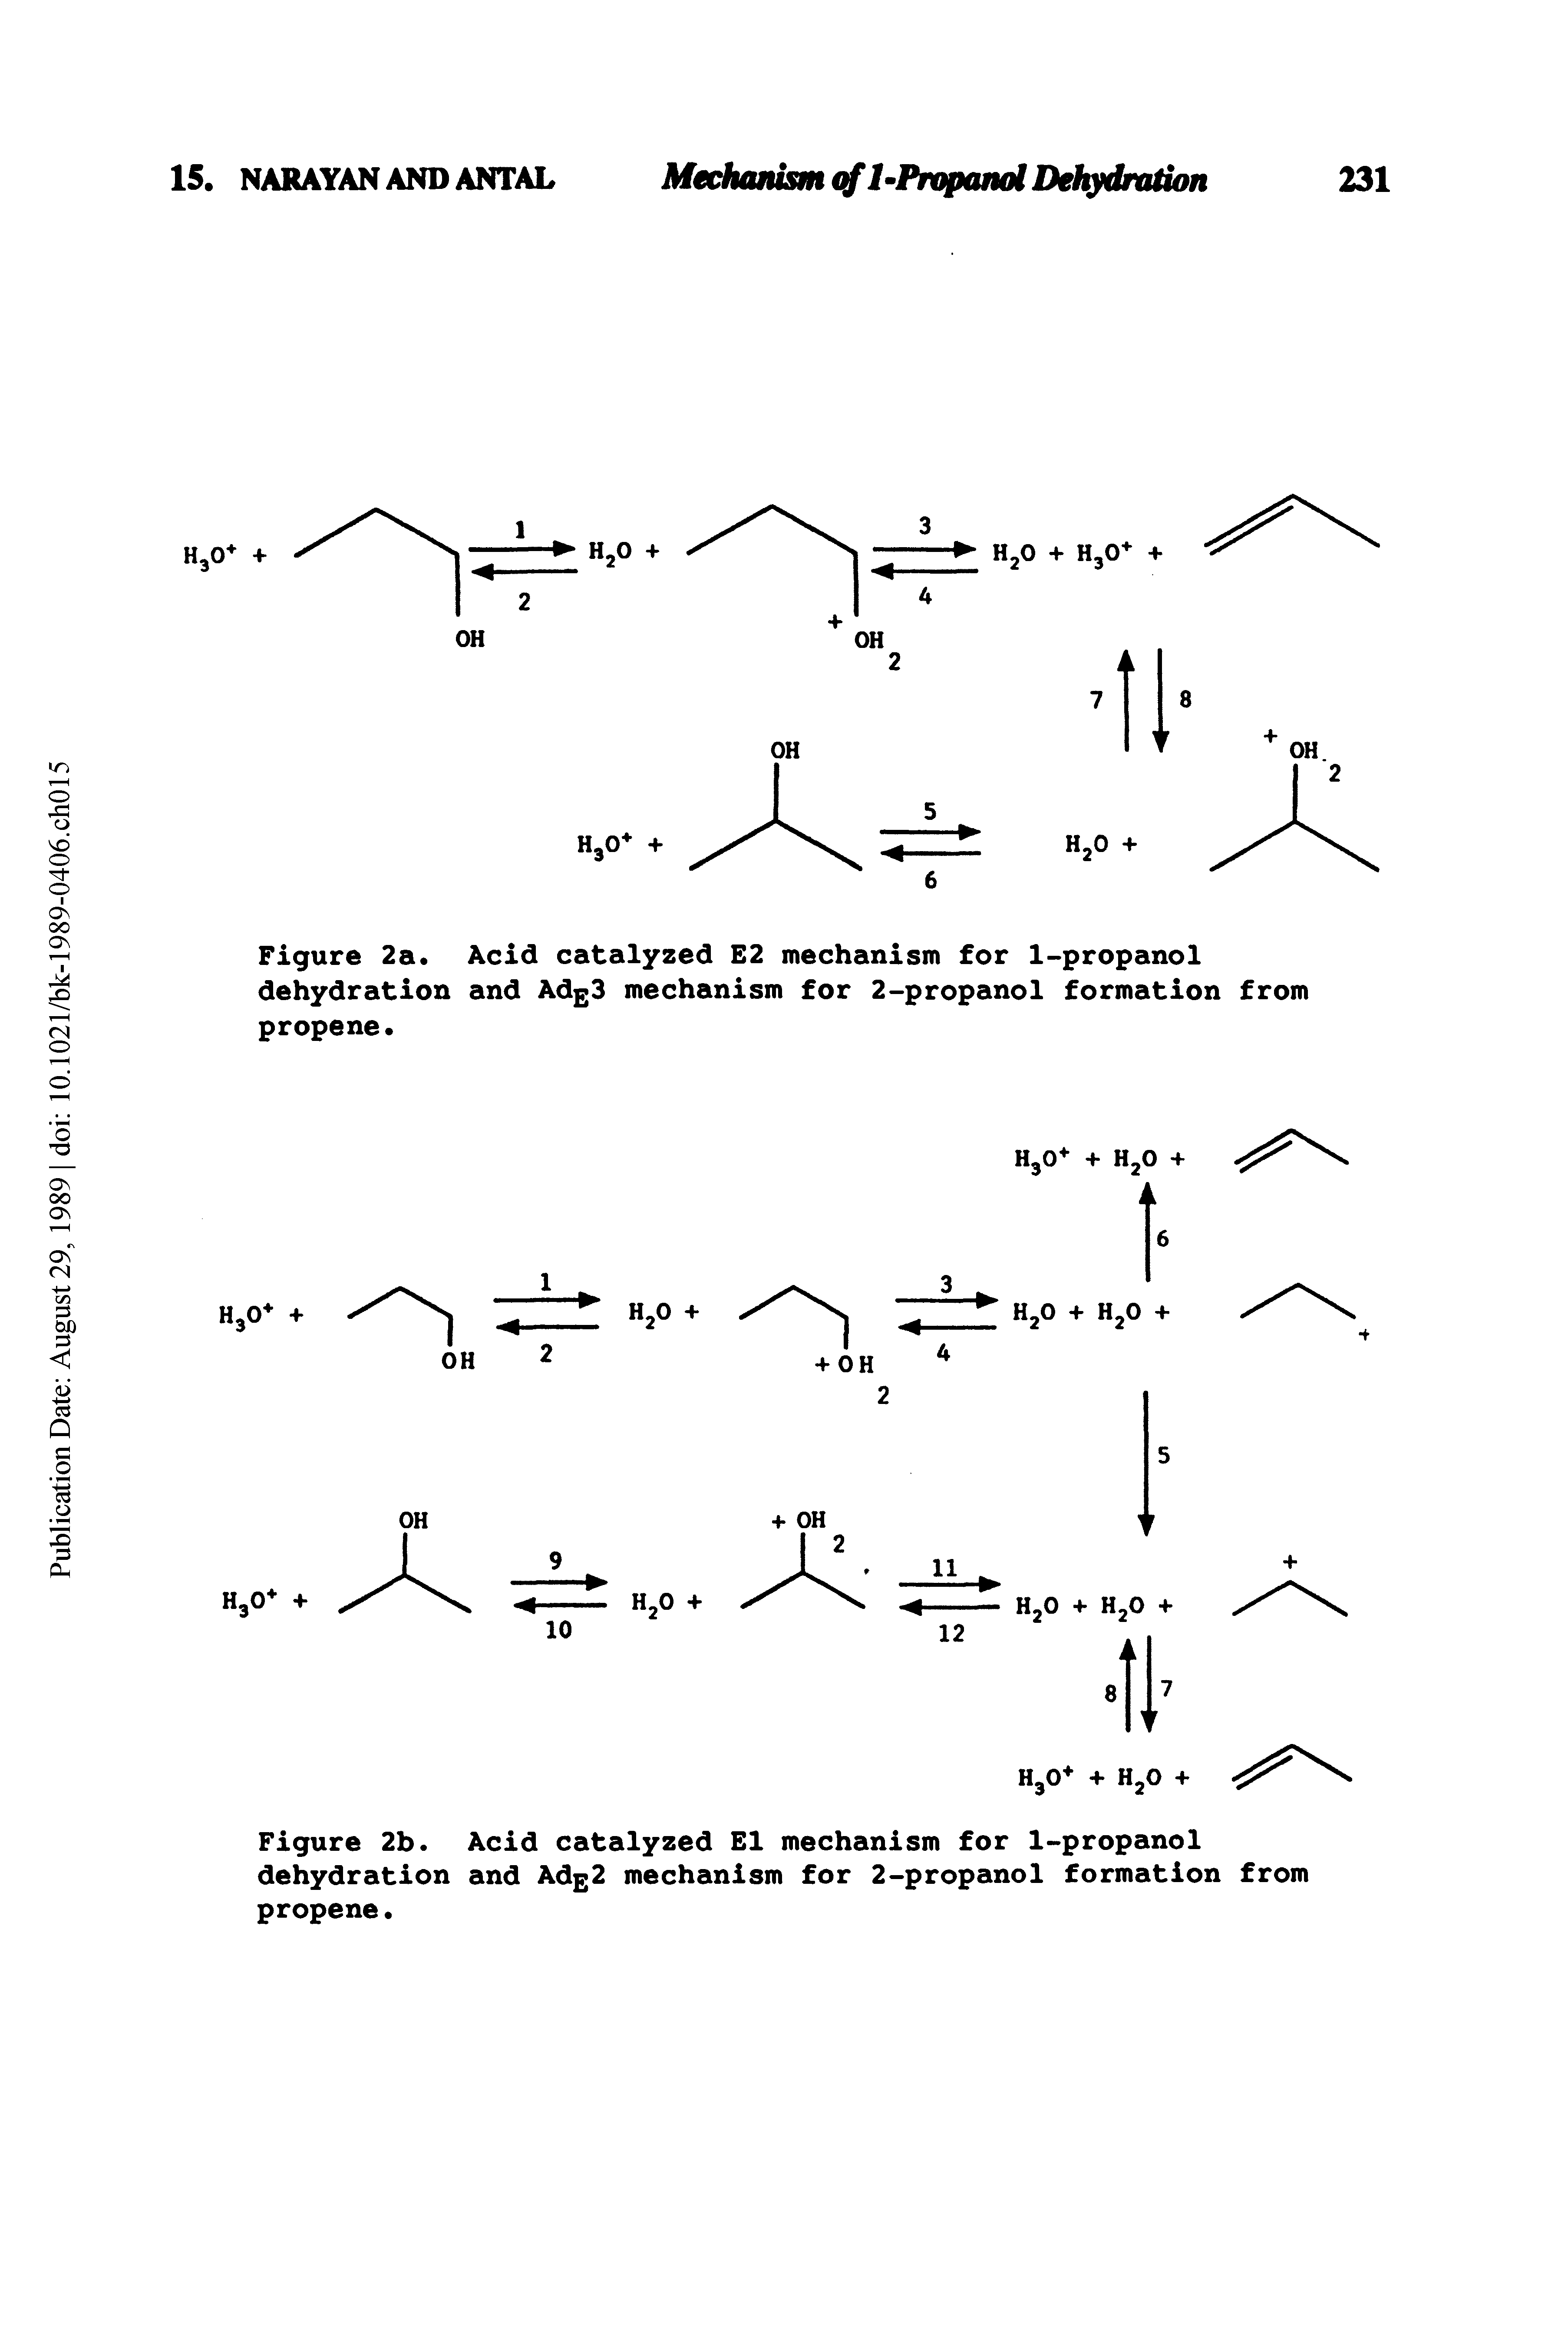 Figure 2a. Acid catalyzed E2 mechanism for 1-propanol dehydration and Adg3 mechanism for 2-propanol formation from propene.